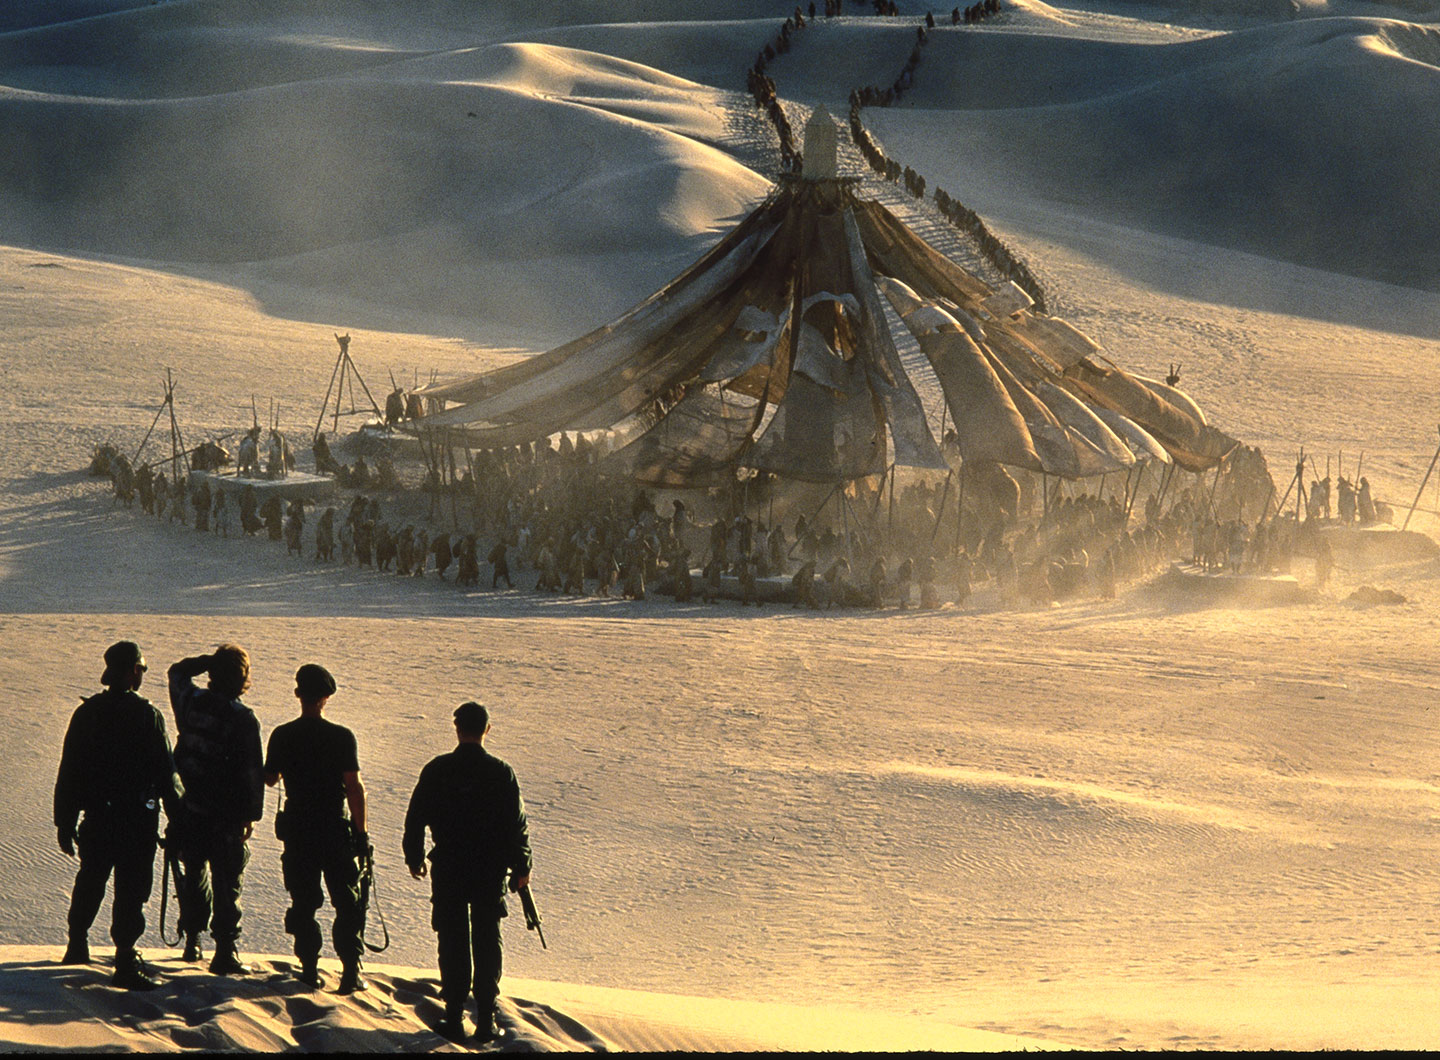 Stargate header image